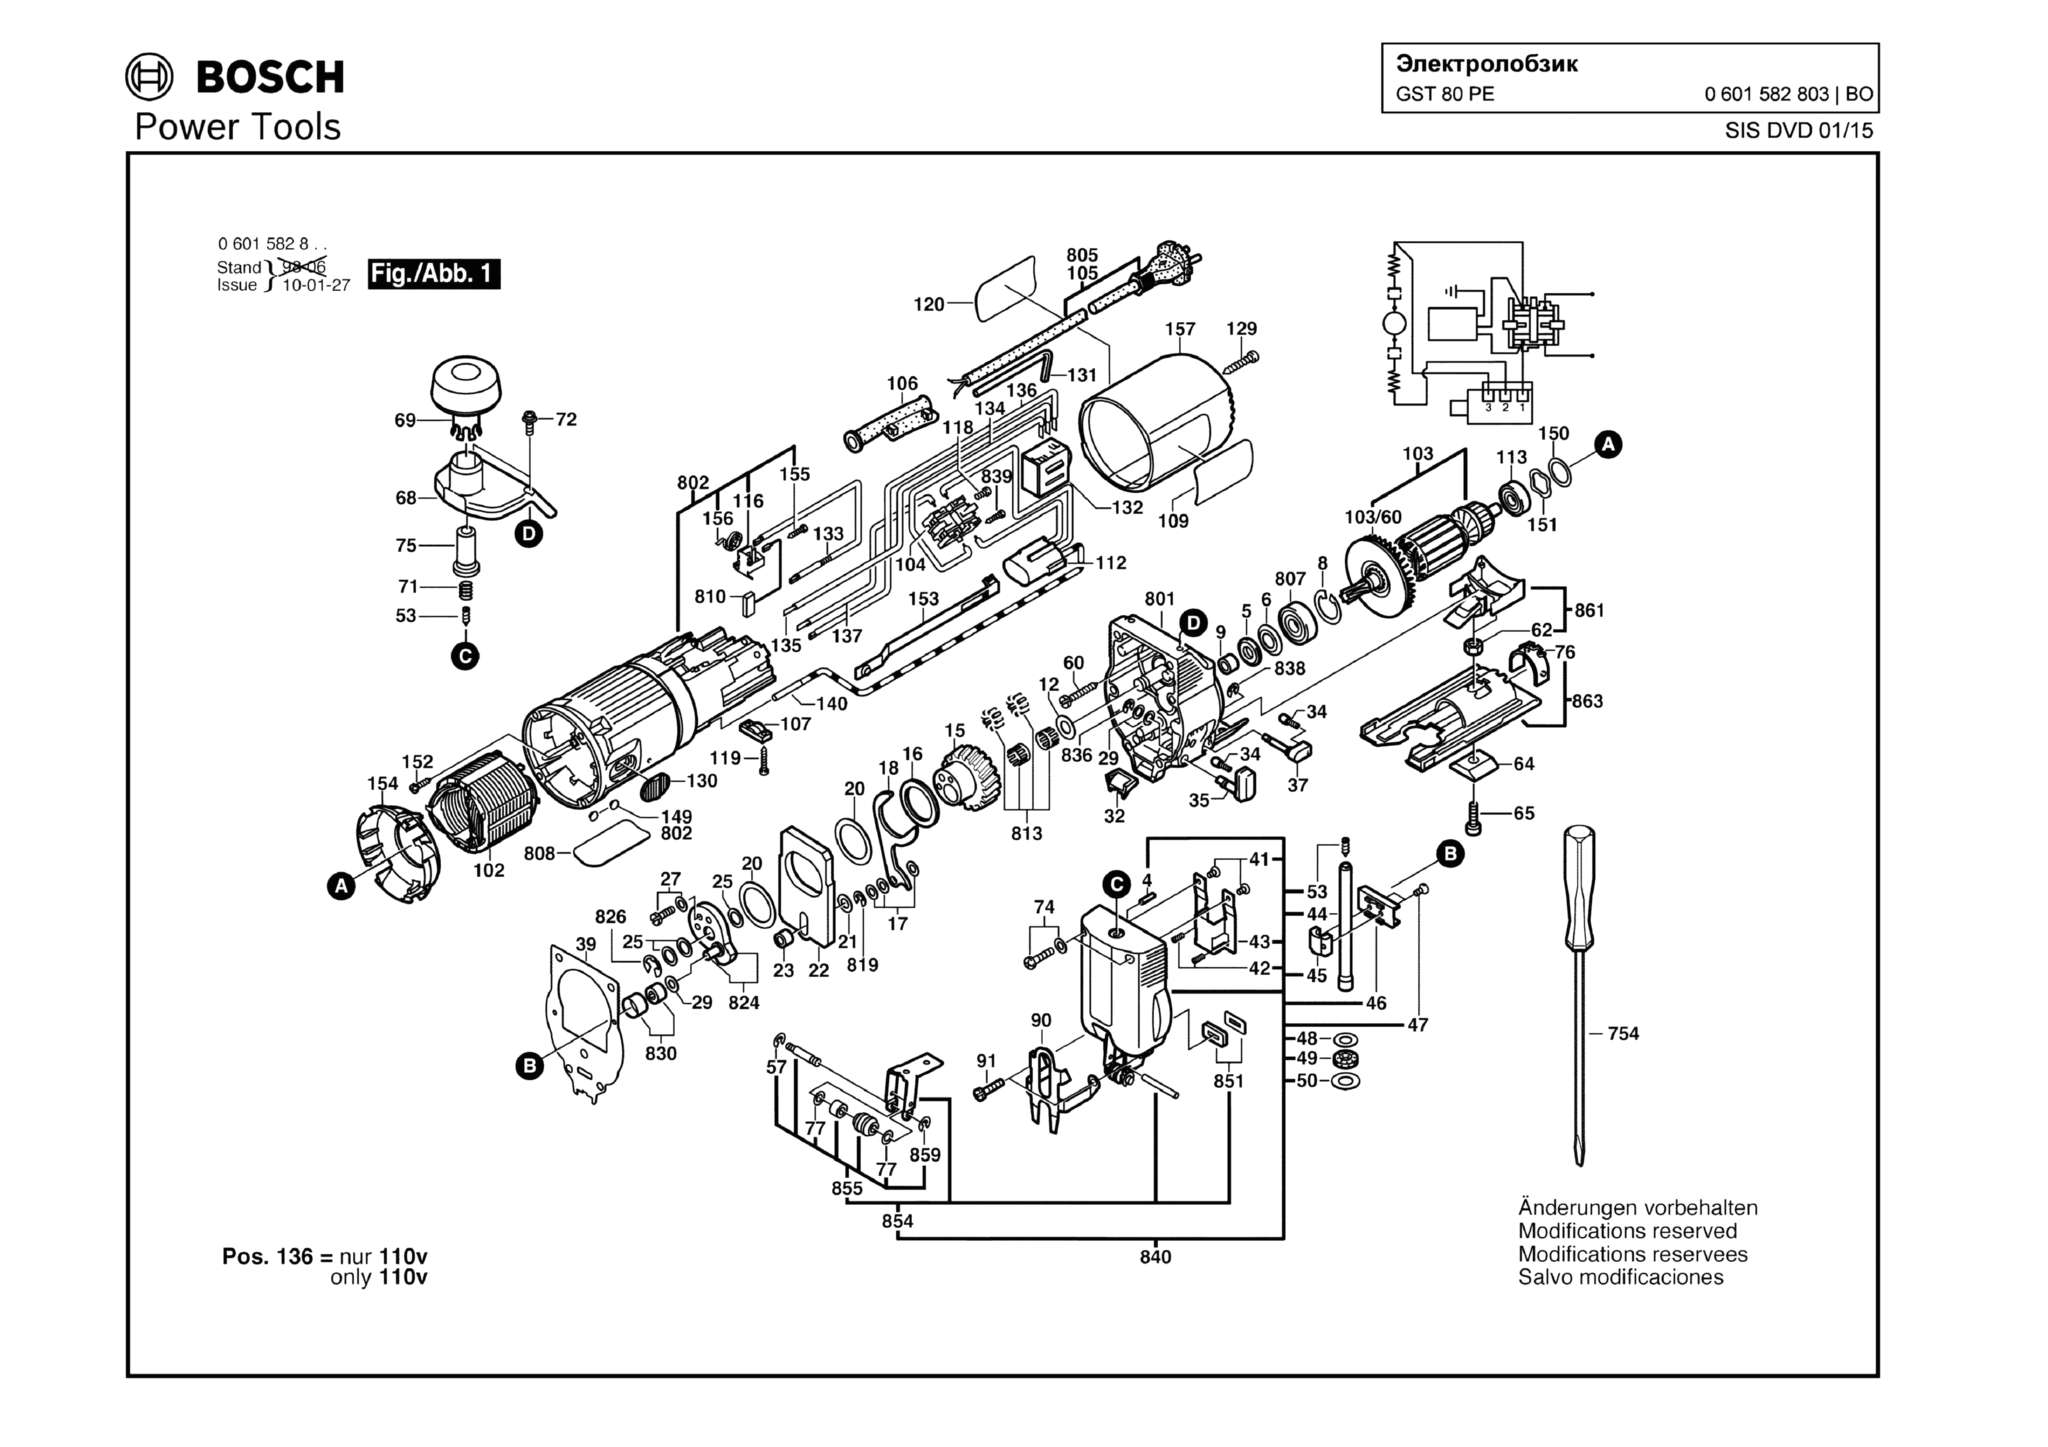 Запчасти, схема и деталировка Bosch GST 80 PE (ТИП 0601582803)